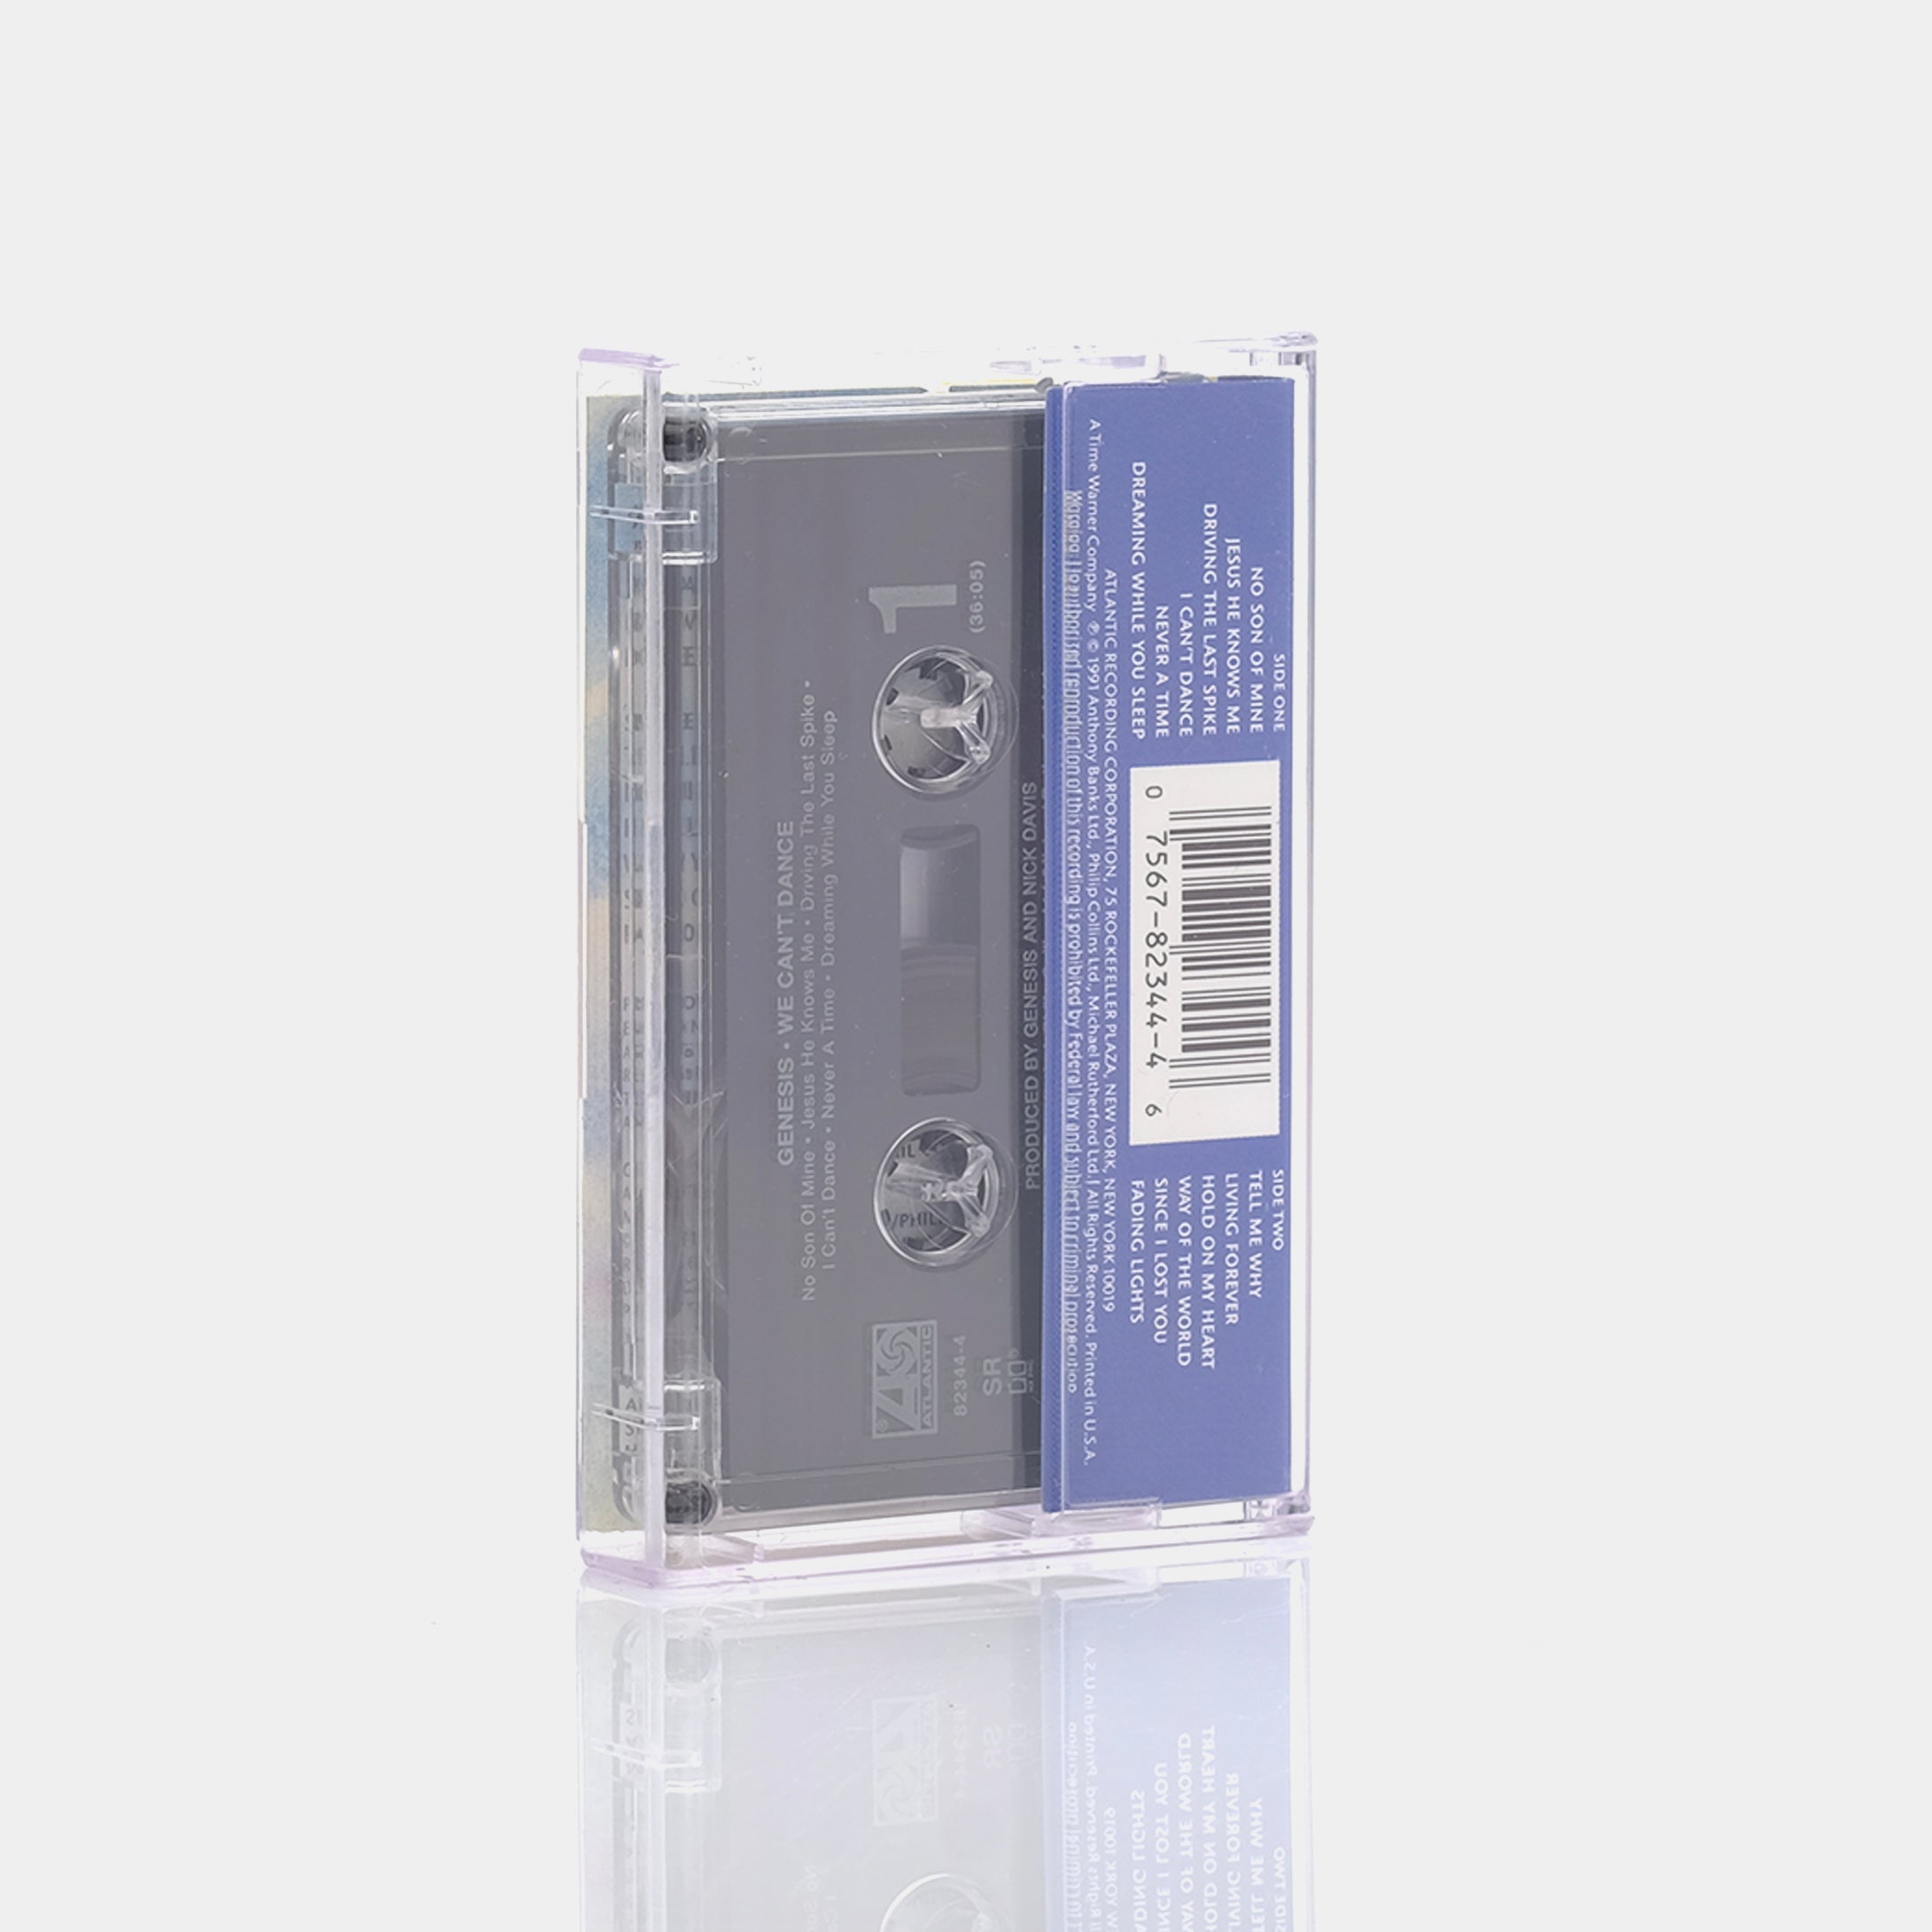 Genesis - We Can't Dance Cassette Tape